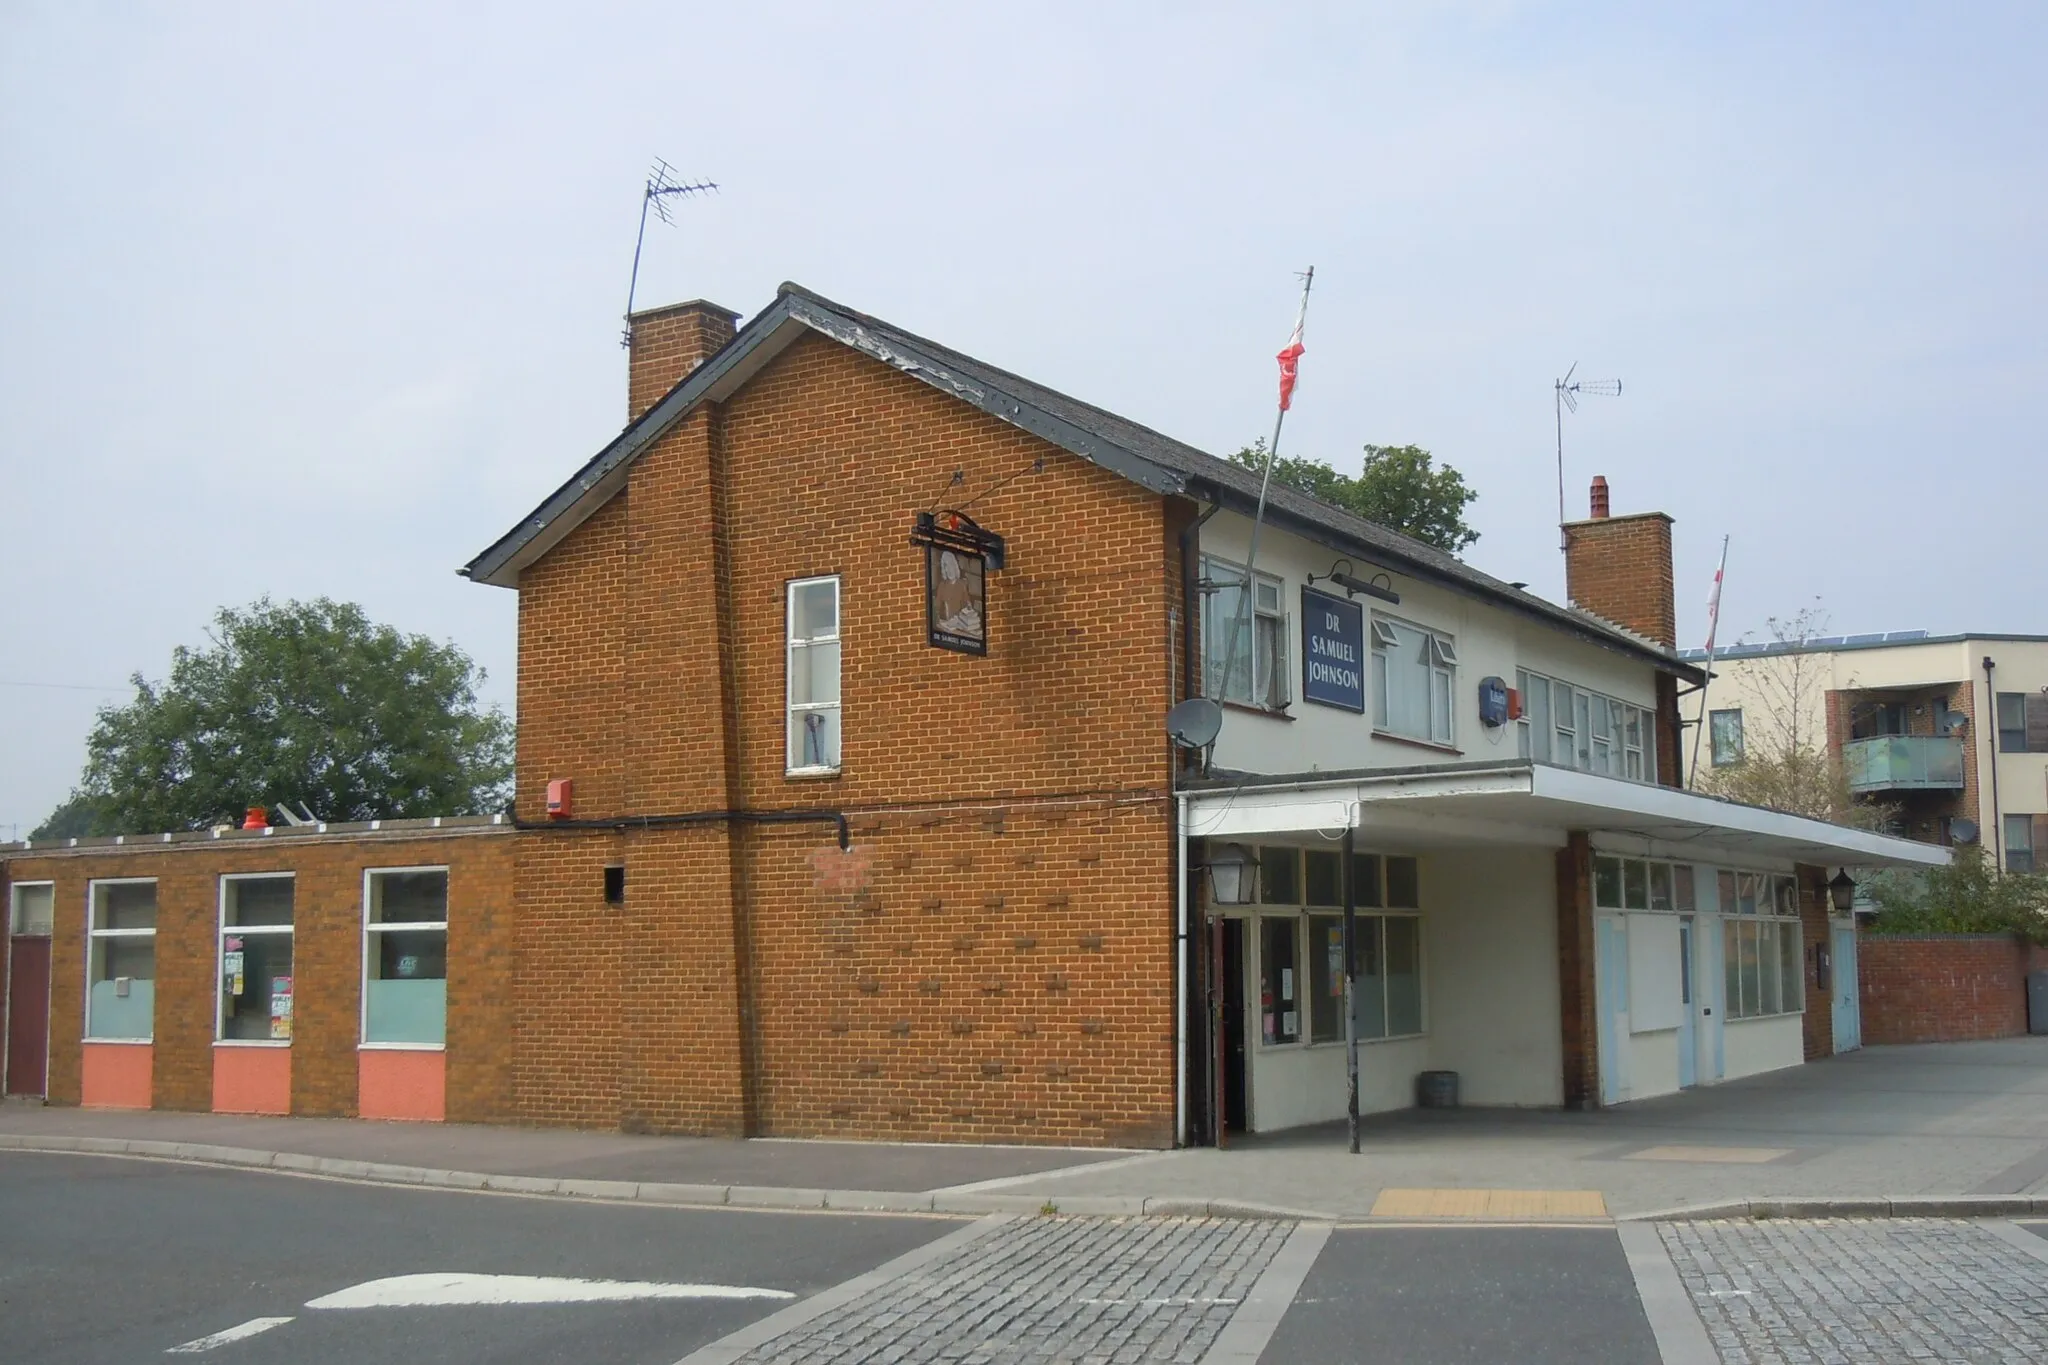 Photo showing: Dr Samuel Johnson Pub, Stagelands, Langley Green, Crawley, West Sussex, England.